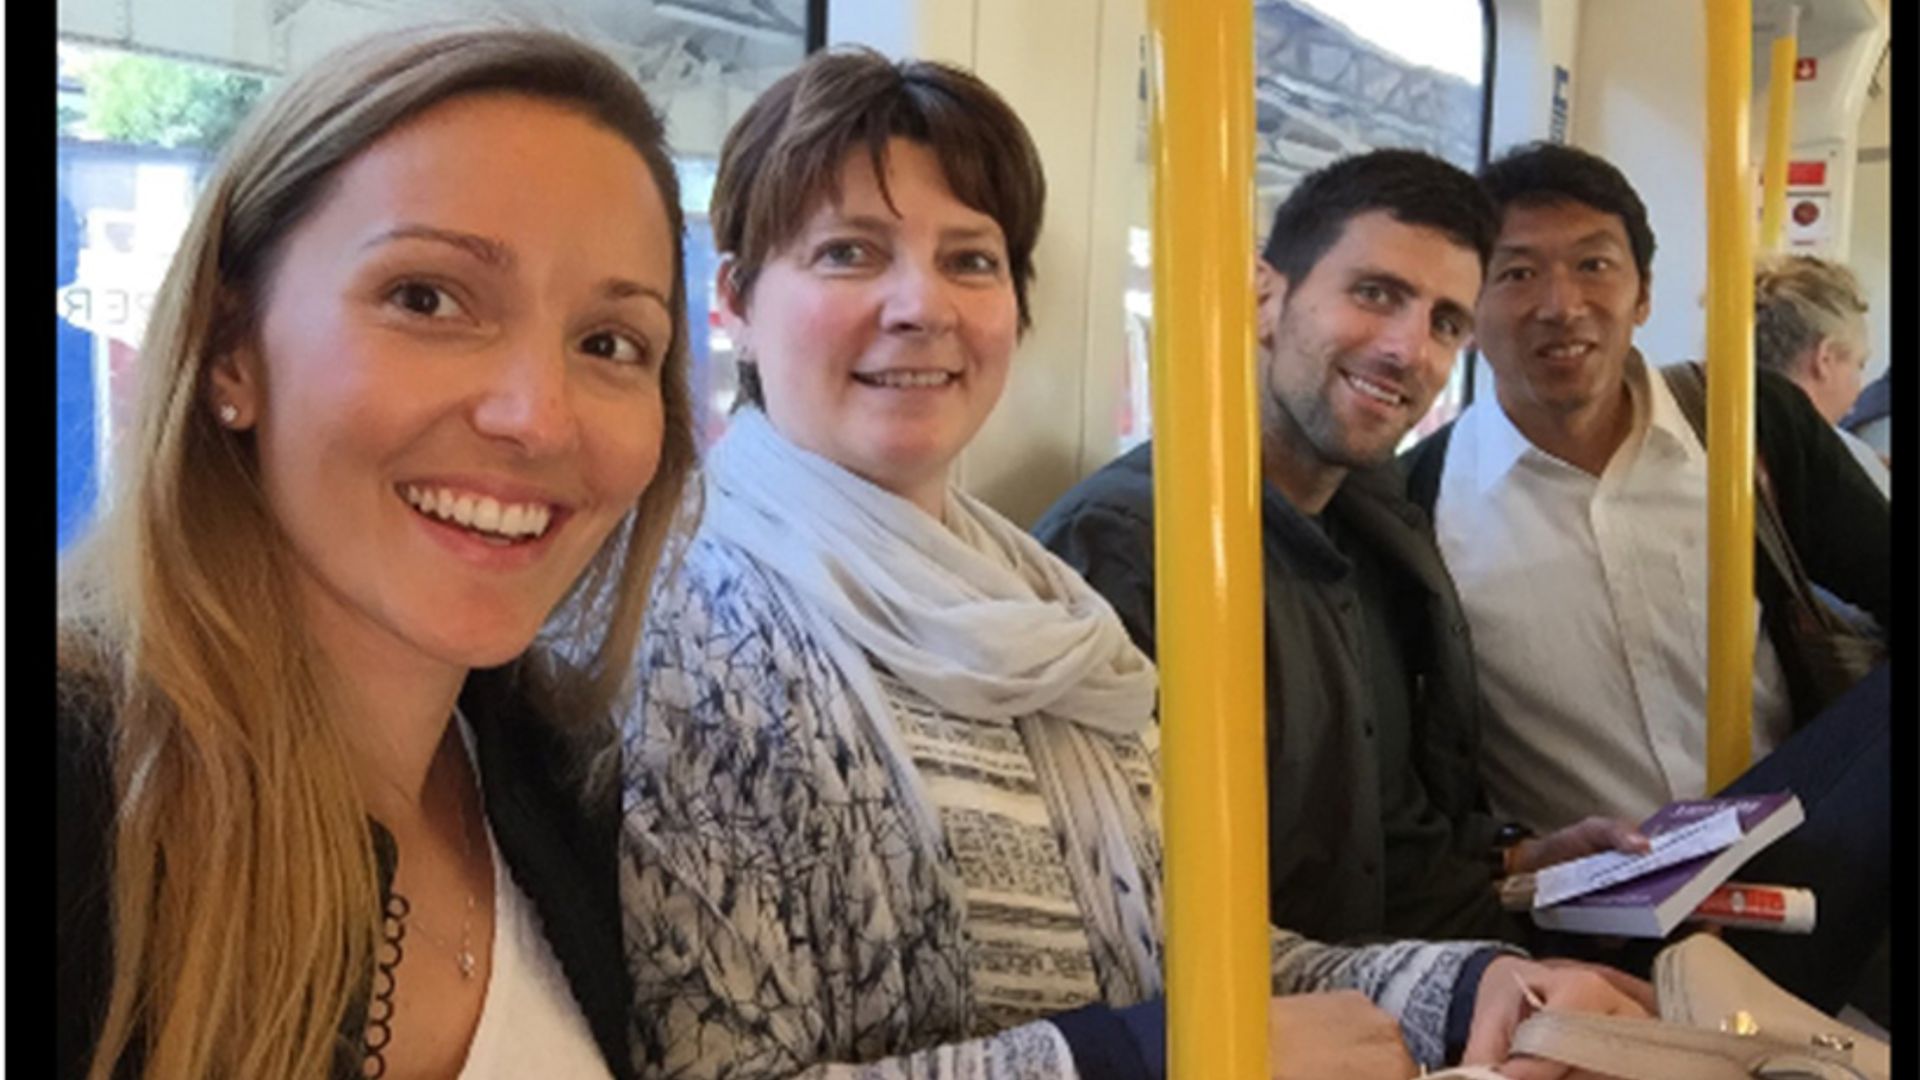 Novak Djokovic rides the Tube: 'I'm officially a Londoner'